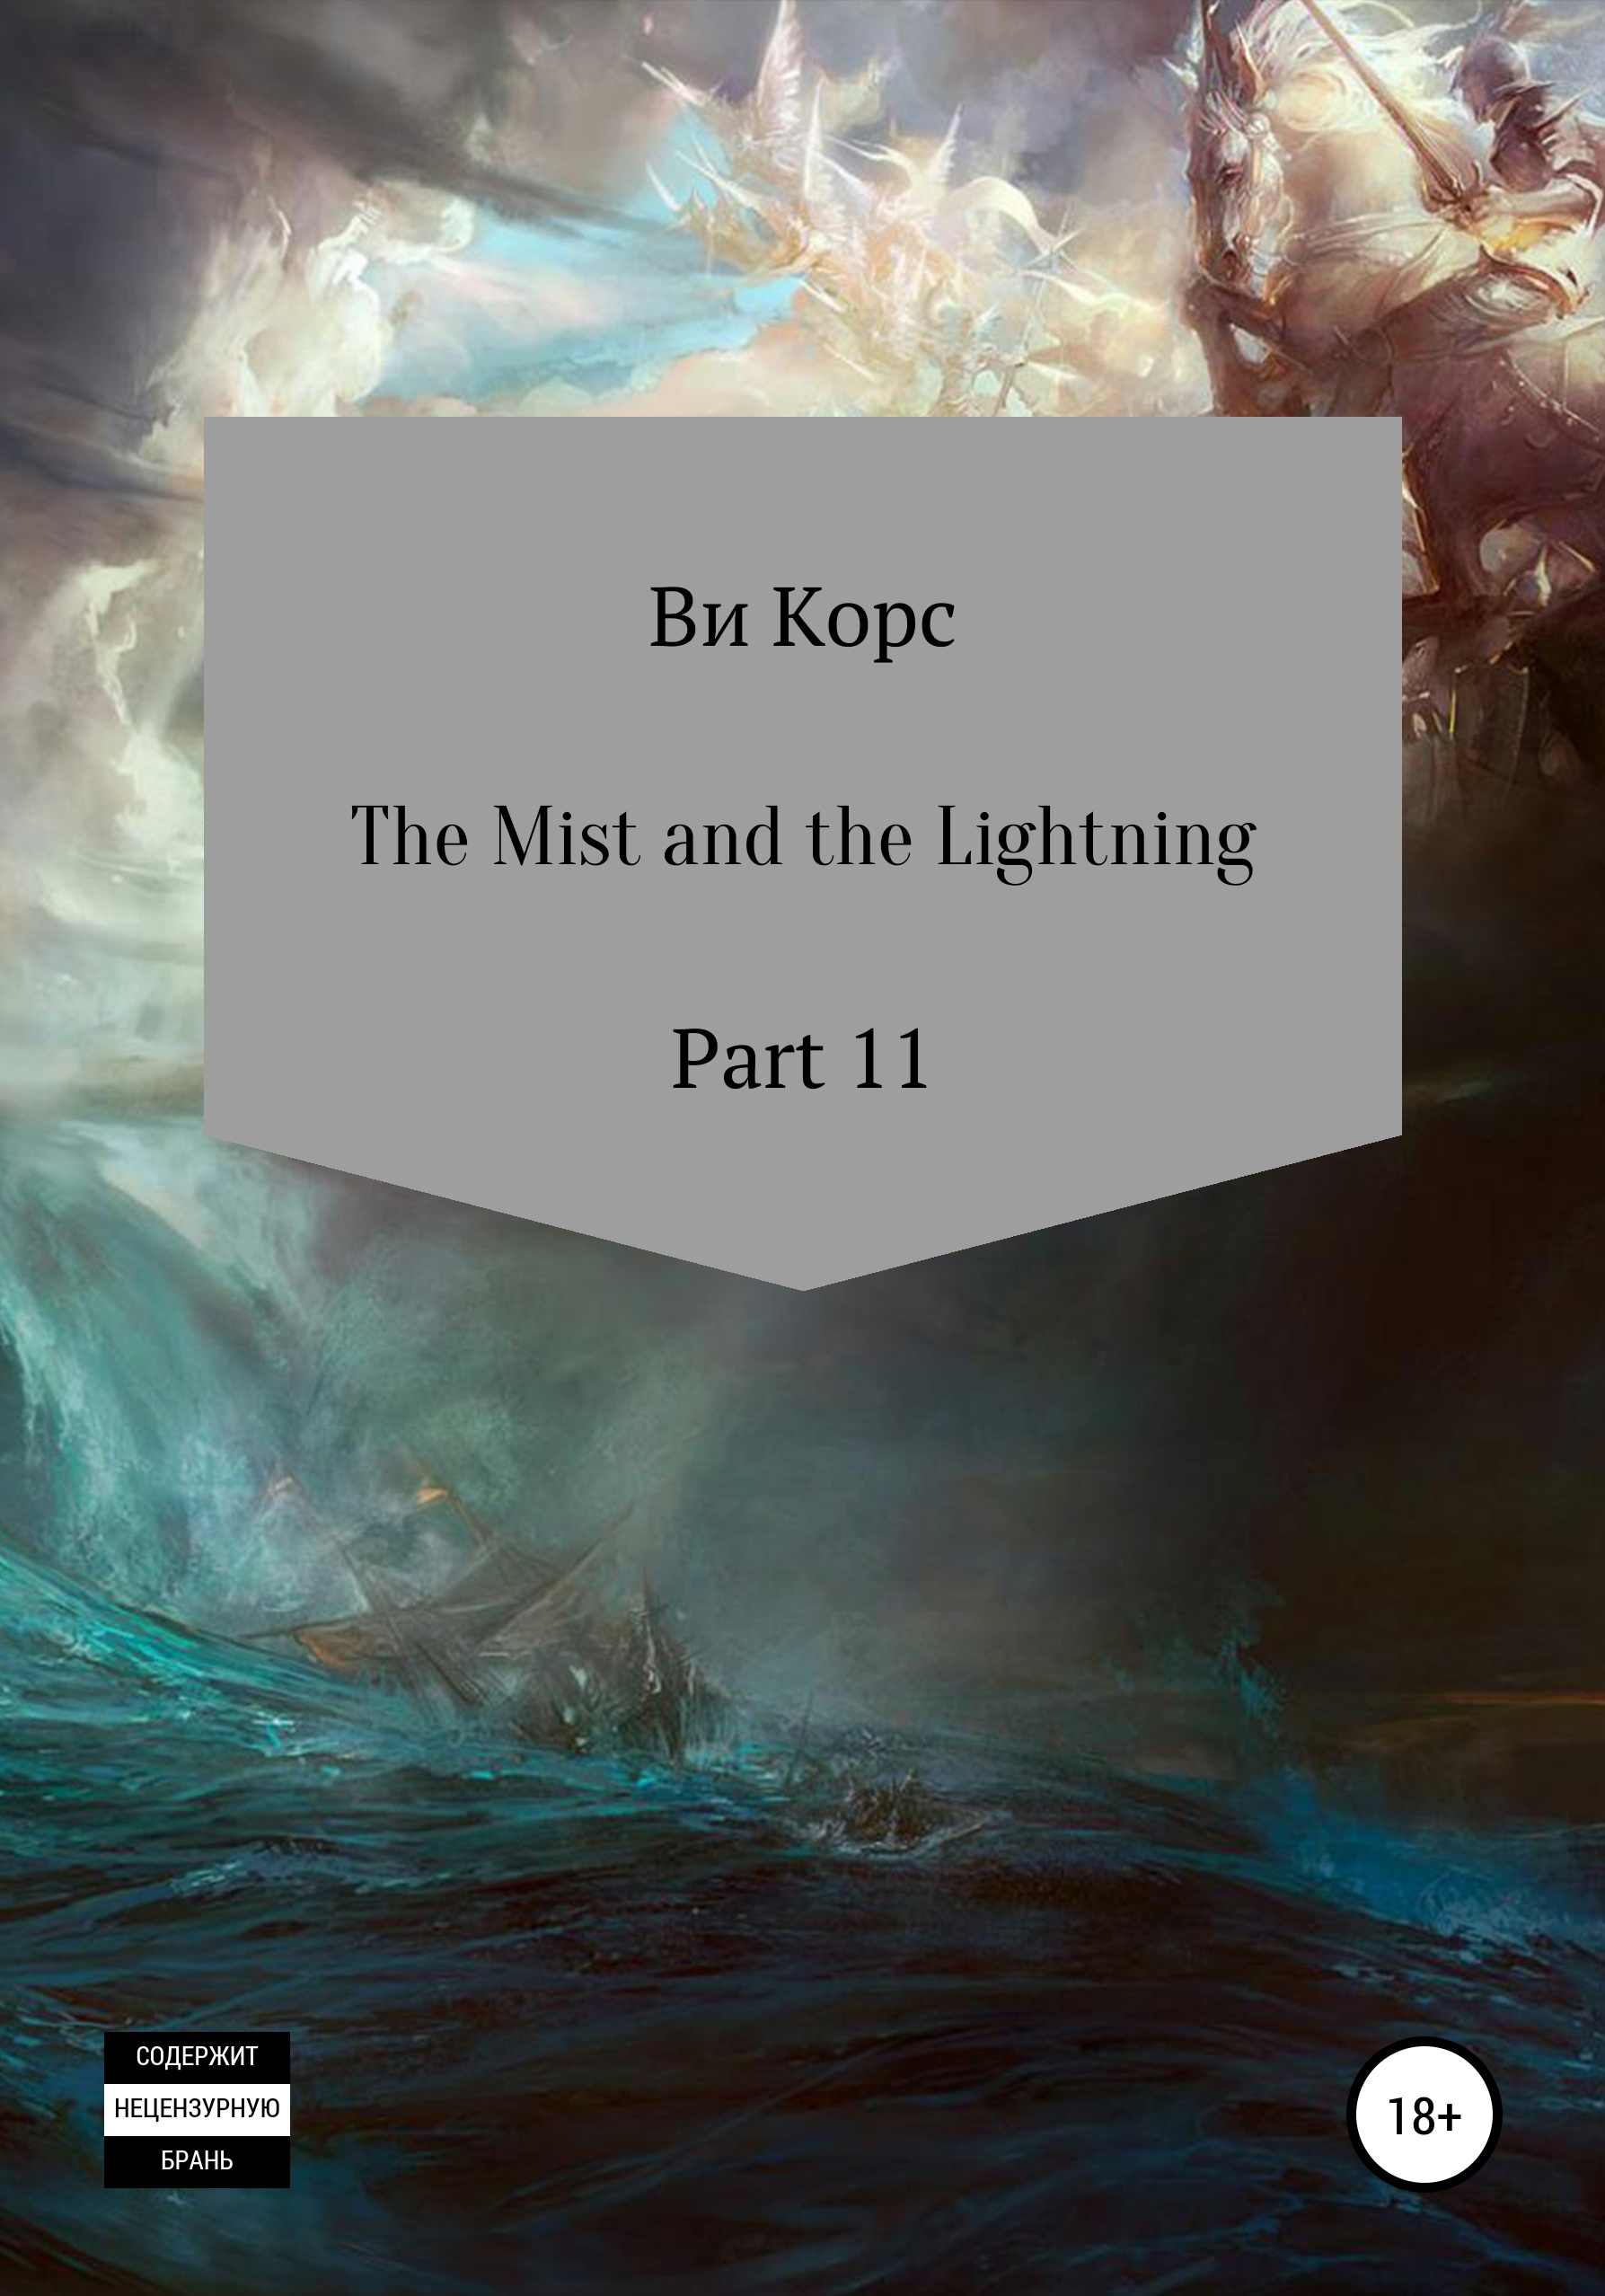 The Mist and the Lightning. Part 12 – Ви Корс